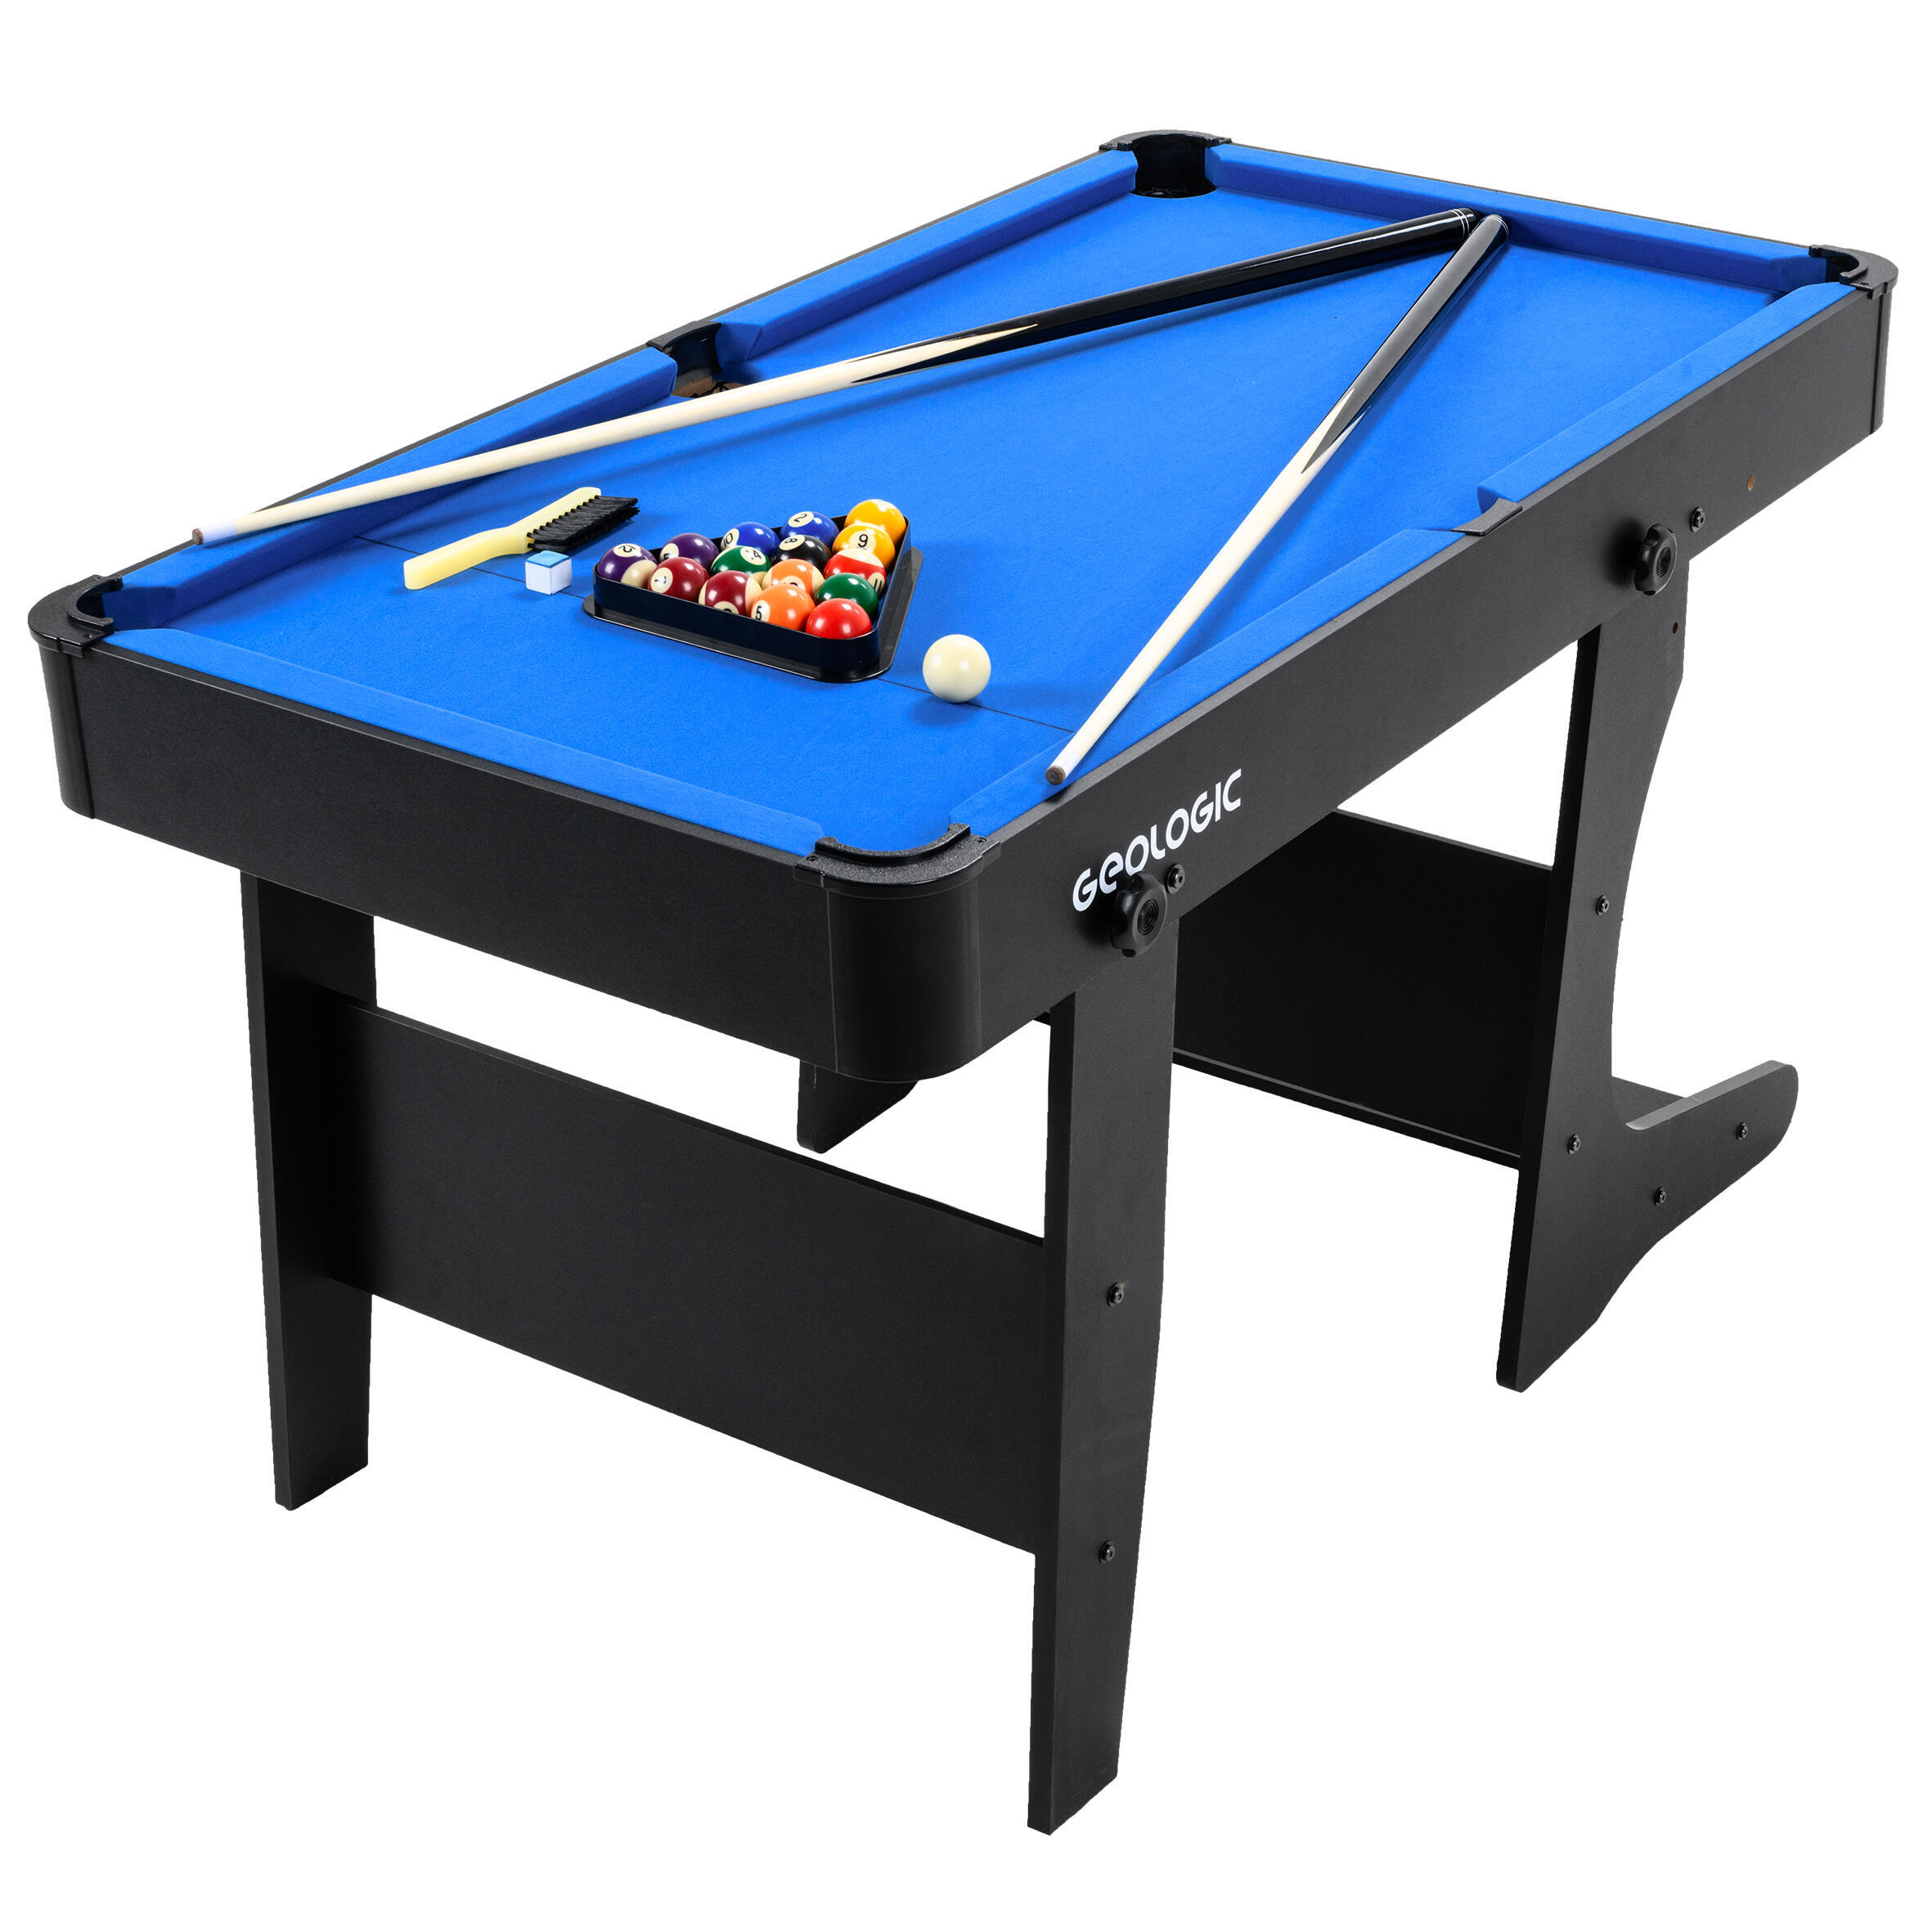 PONGORI Foldable Billiards Table BT 500 US